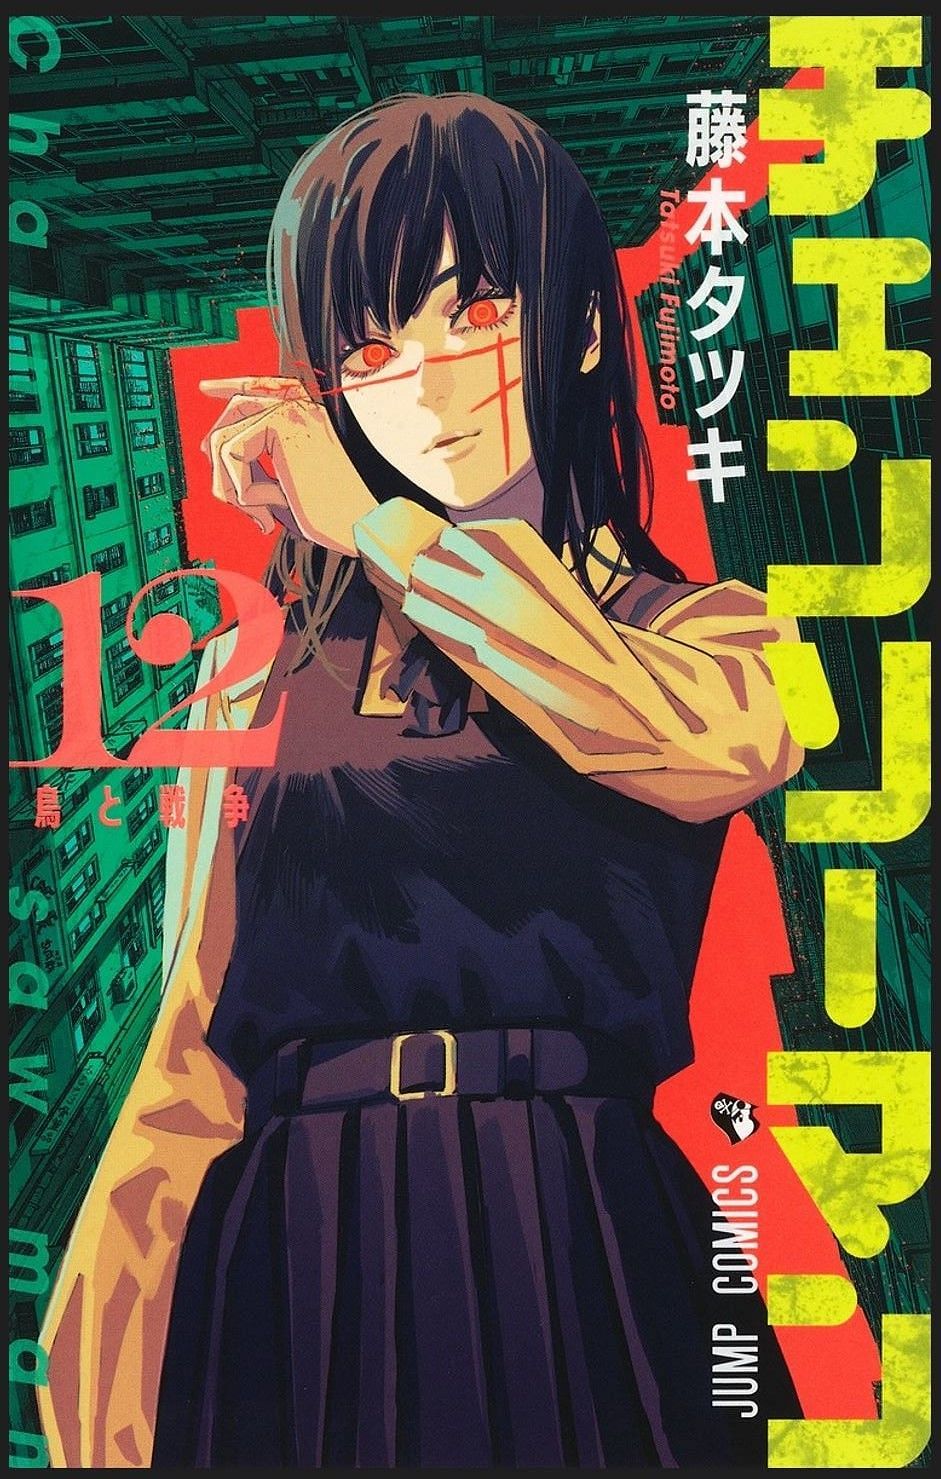 Volume 12 Front Cover (Image via Shueisha)